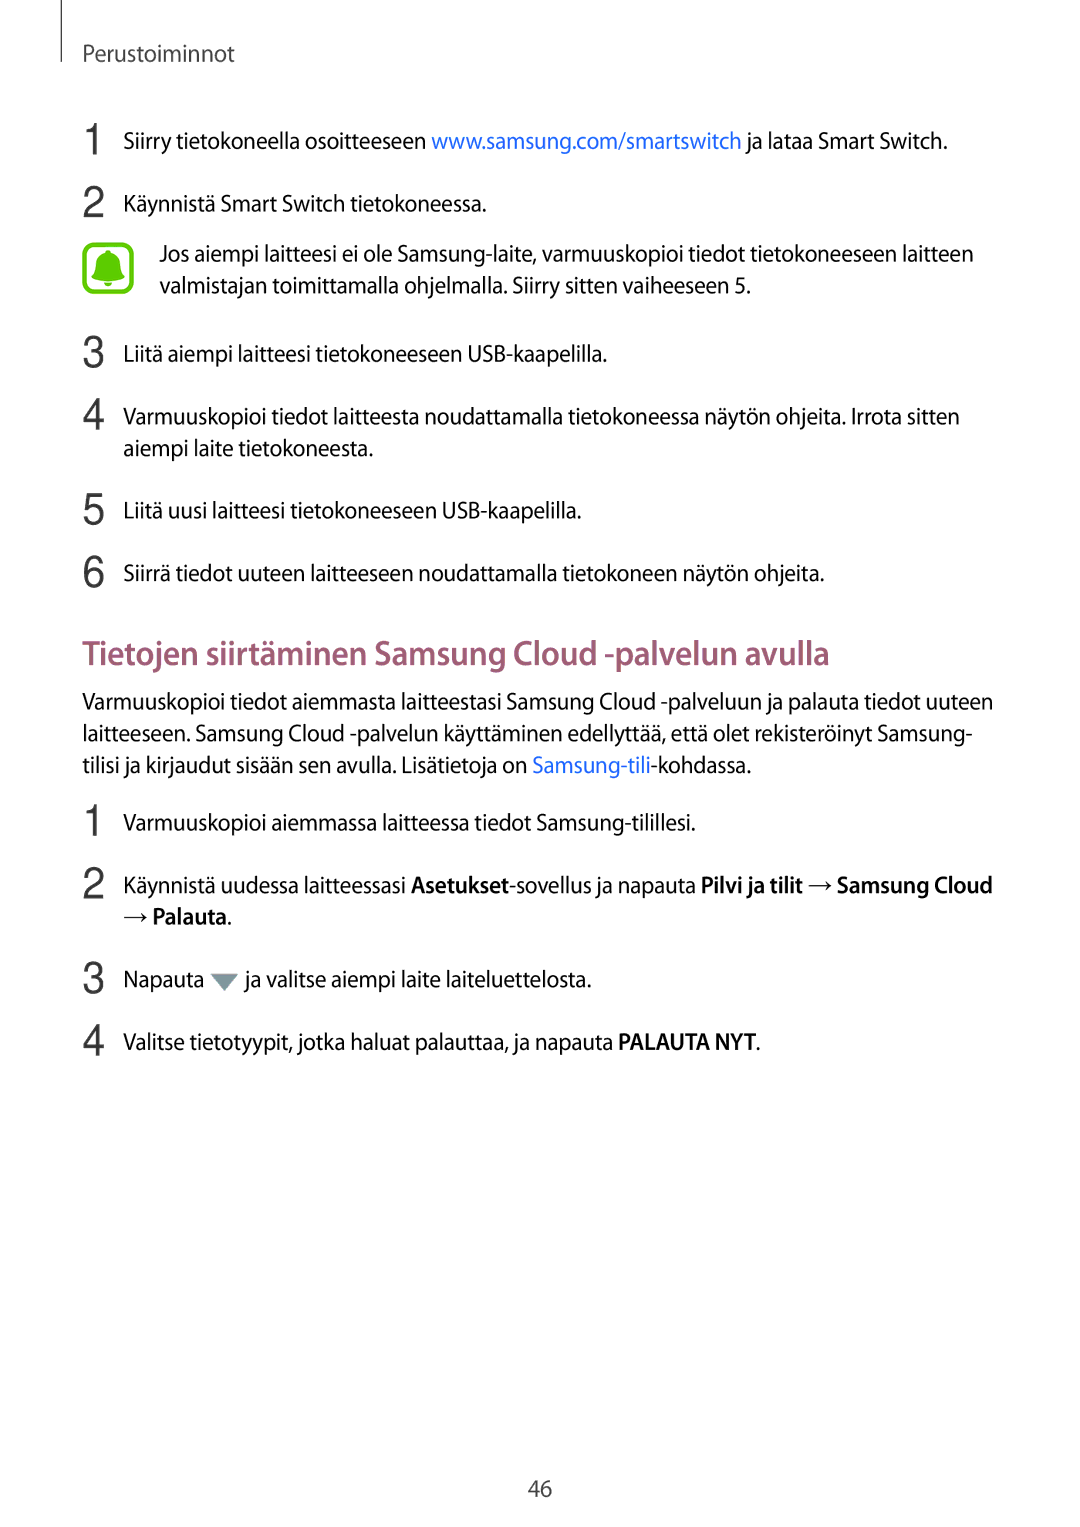 Samsung SM-J330FZKDNEE, SM-J330FZDDNEE, SM-J330FZSDNEE manual Tietojen siirtäminen Samsung Cloud -palvelun avulla, → Palauta 